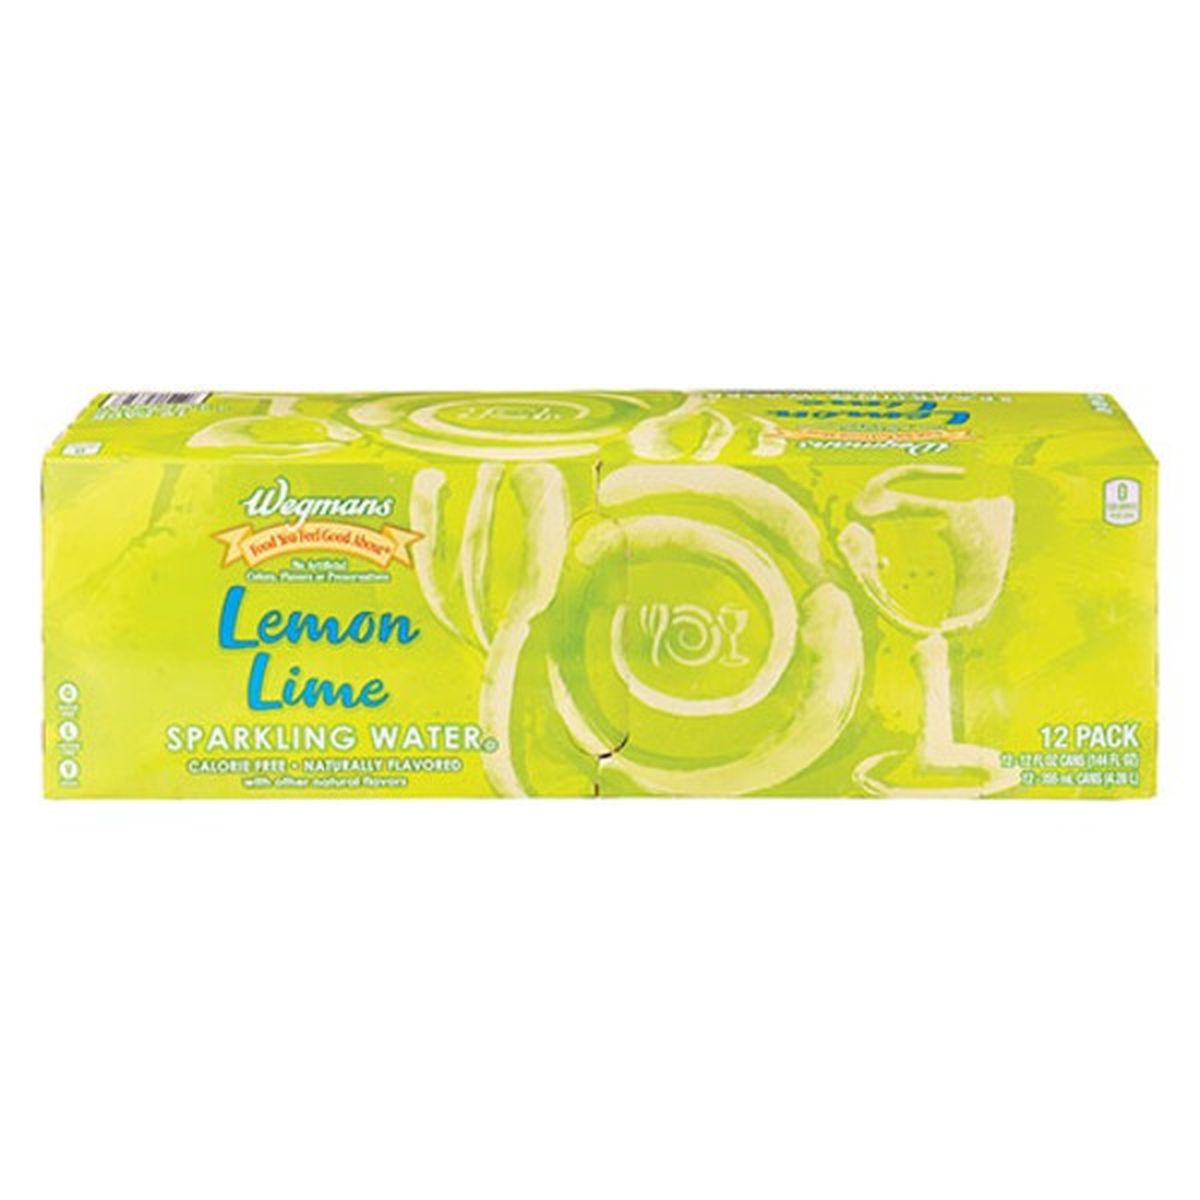 Calories in Wegmans Sparkling Water Lemon Lime, 12 Pack